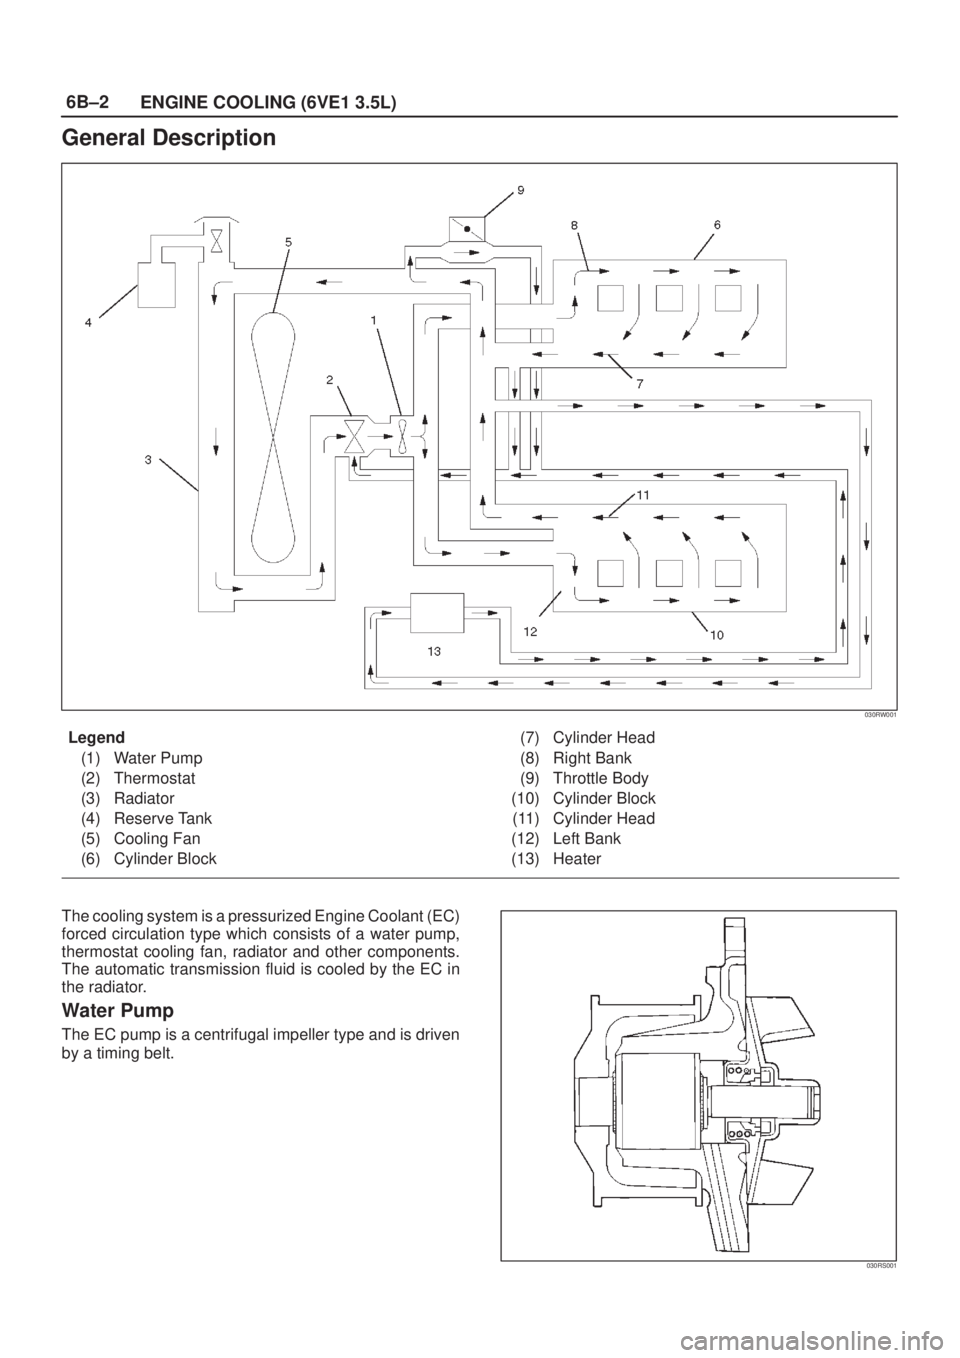 ISUZU AXIOM 2002  Service Repair Manual 6B±2
ENGINE COOLING (6VE1 3.5L)
General Description
030RW001
Legend
(1) Water Pump
(2) Thermostat
(3) Radiator
(4) Reserve Tank
(5) Cooling Fan
(6) Cylinder Block(7) Cylinder Head
(8) Right Bank
(9) 